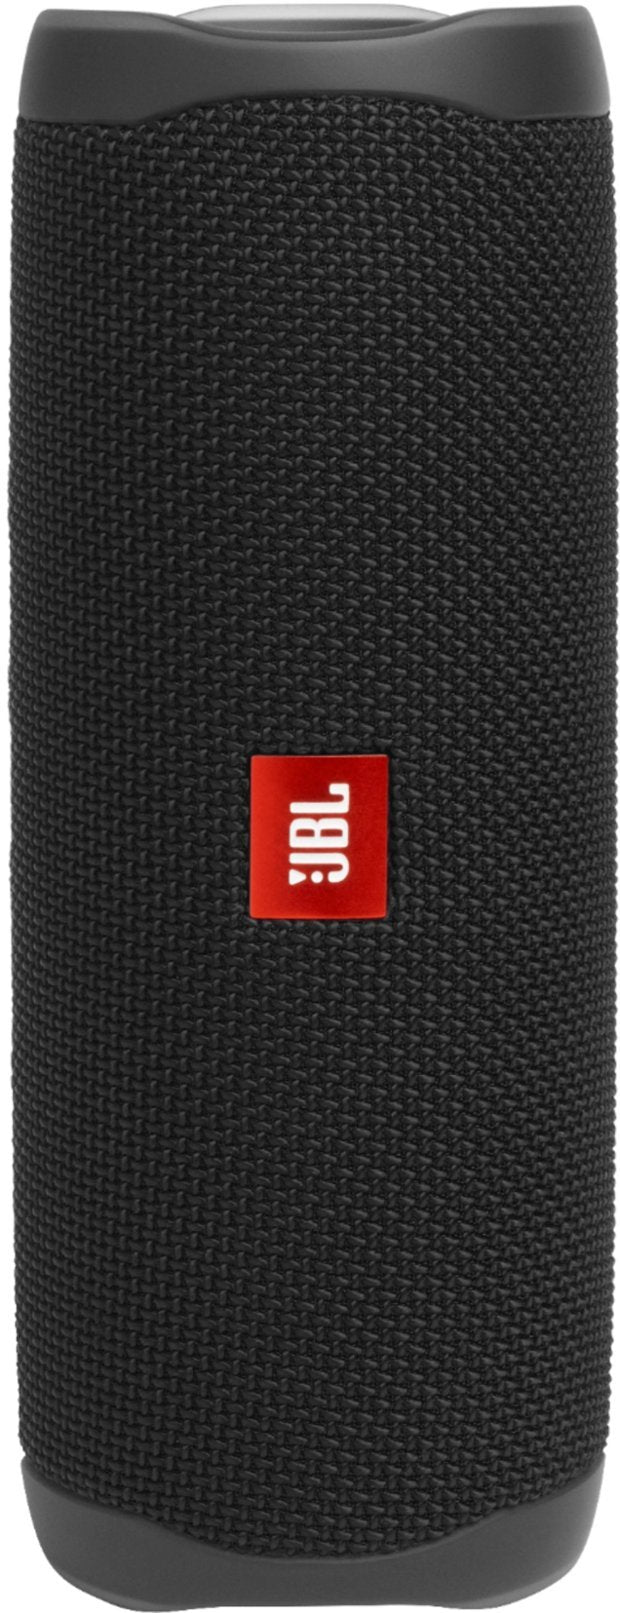 JBL Flip 5 Portable Bluetooth Speaker - CS - Black (New)